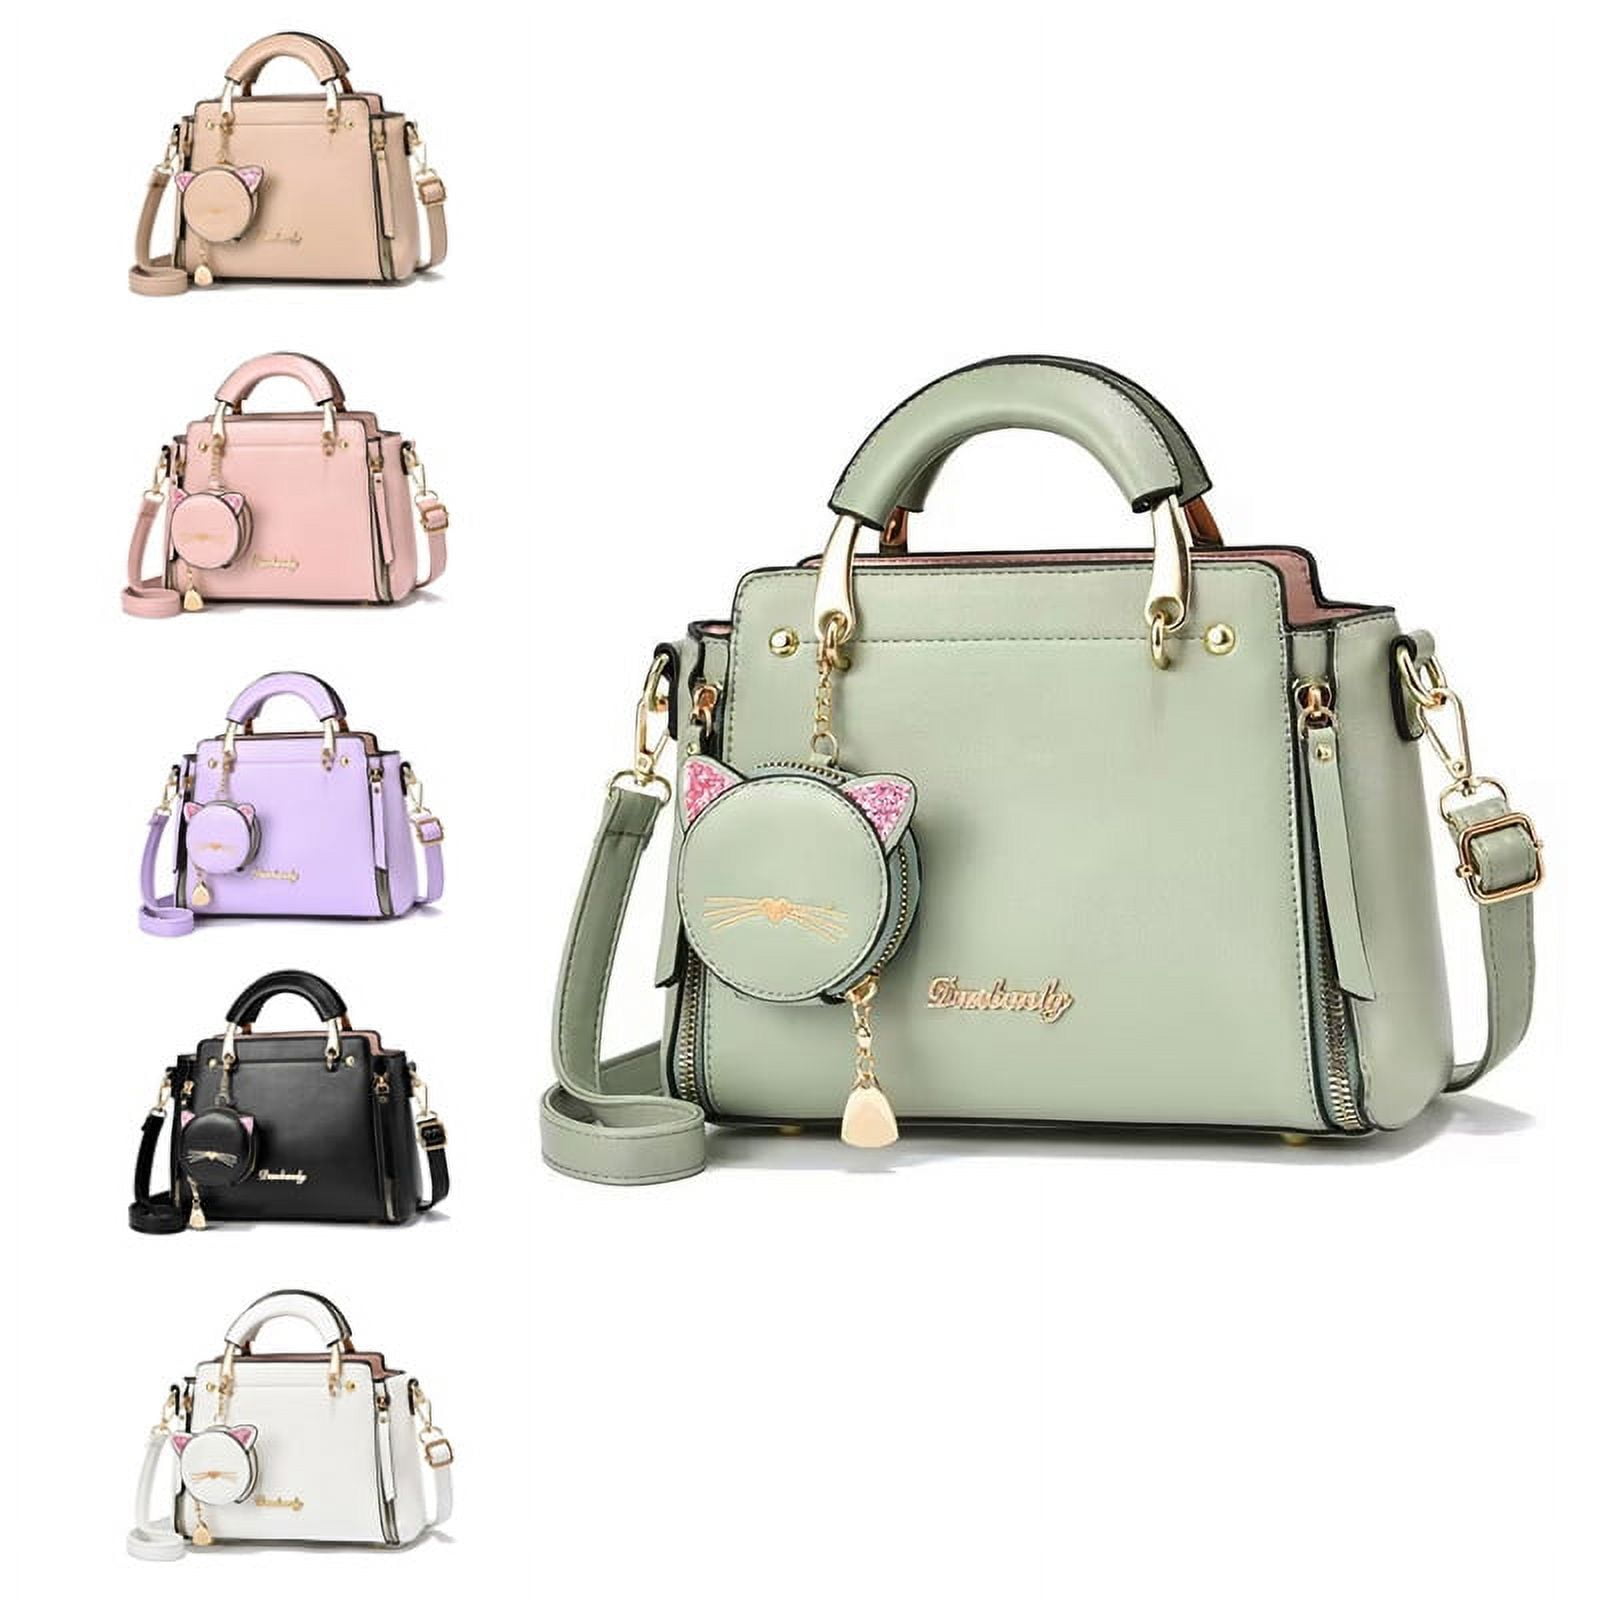 Luxury Handbags Women Bags Designer PU Leather Messenger Bag Fashion Shoulder Crossbody Bag Green 045dec47 891d 437f bee0 9c165b1c5d5b.82dff77525346d3be54cea43f5577fc4